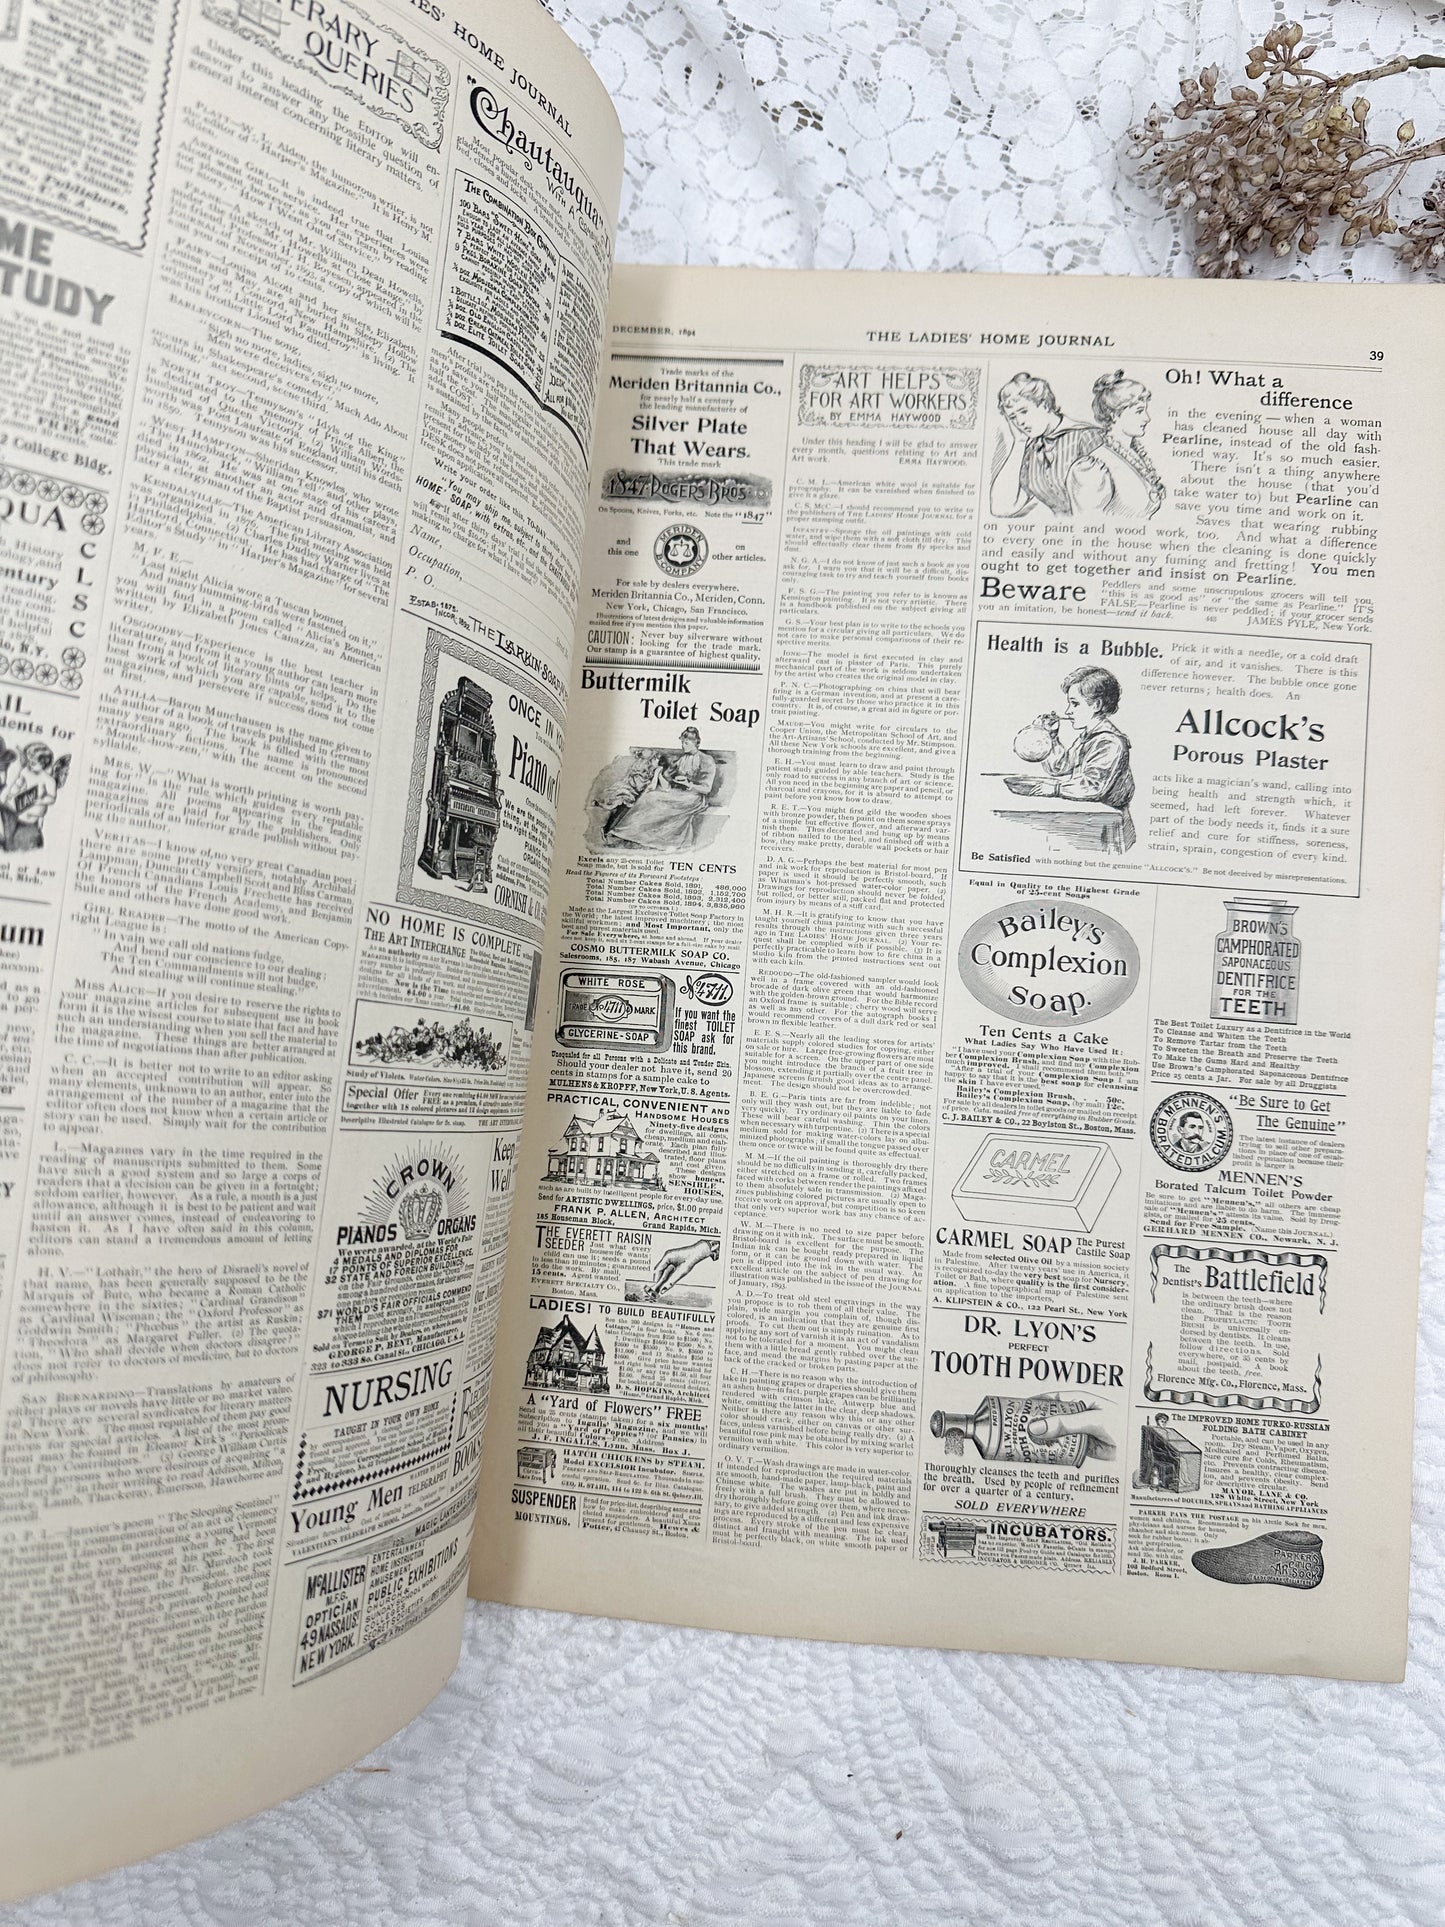 1894 Ladies Home Journal Magazine